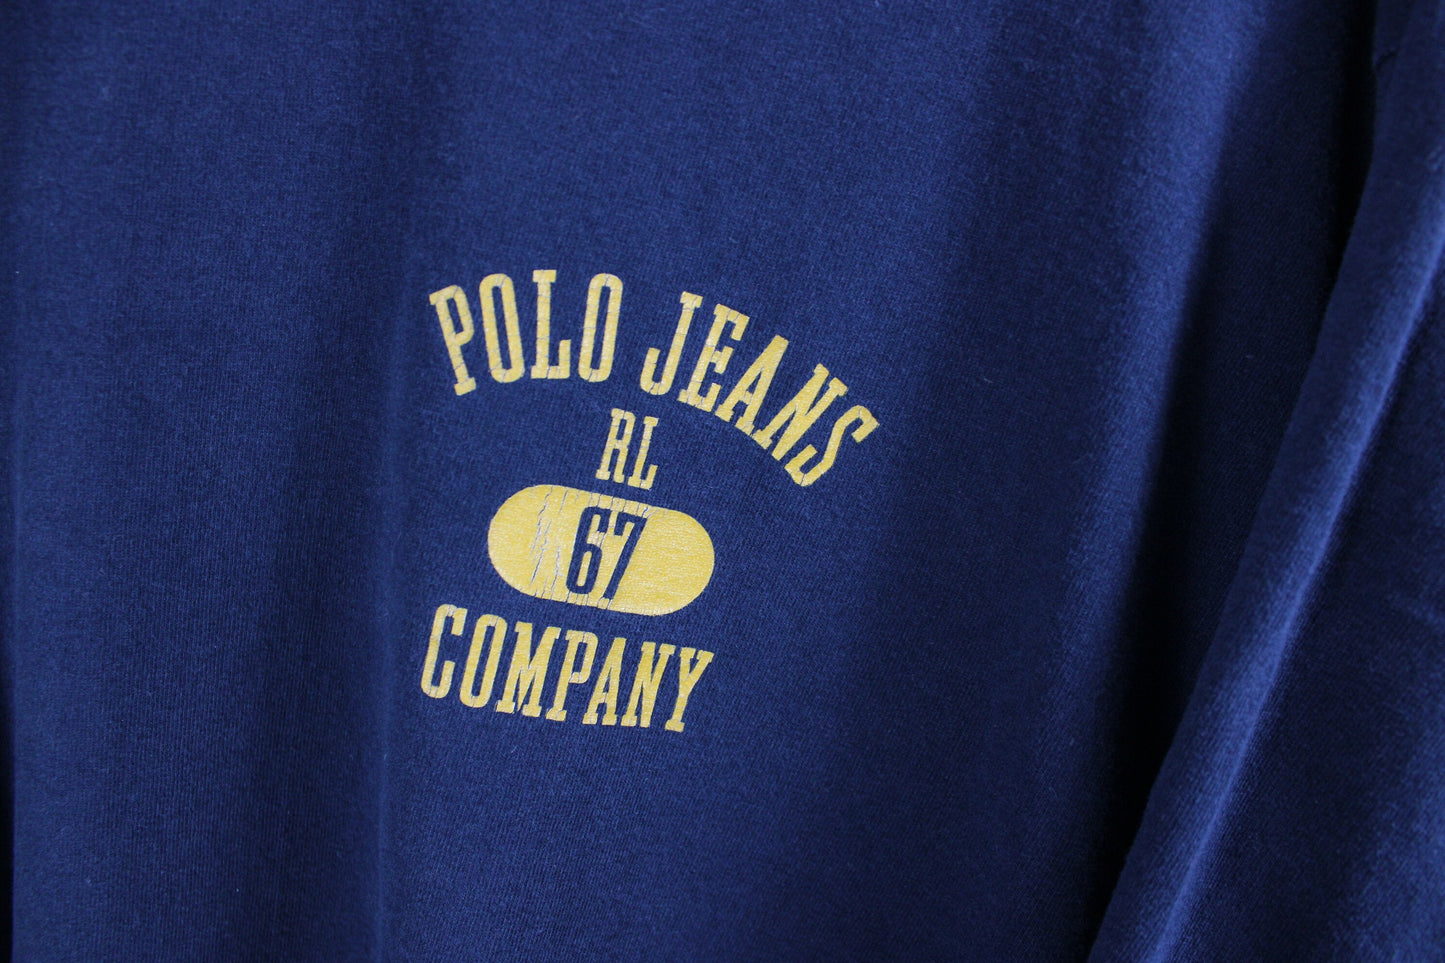 Ralph-Lauren Polo-Jeans T-Shirt / 90s Vintage Long-Sleeve Tee Shirt/ Hip Hop Clothing / Streetwear